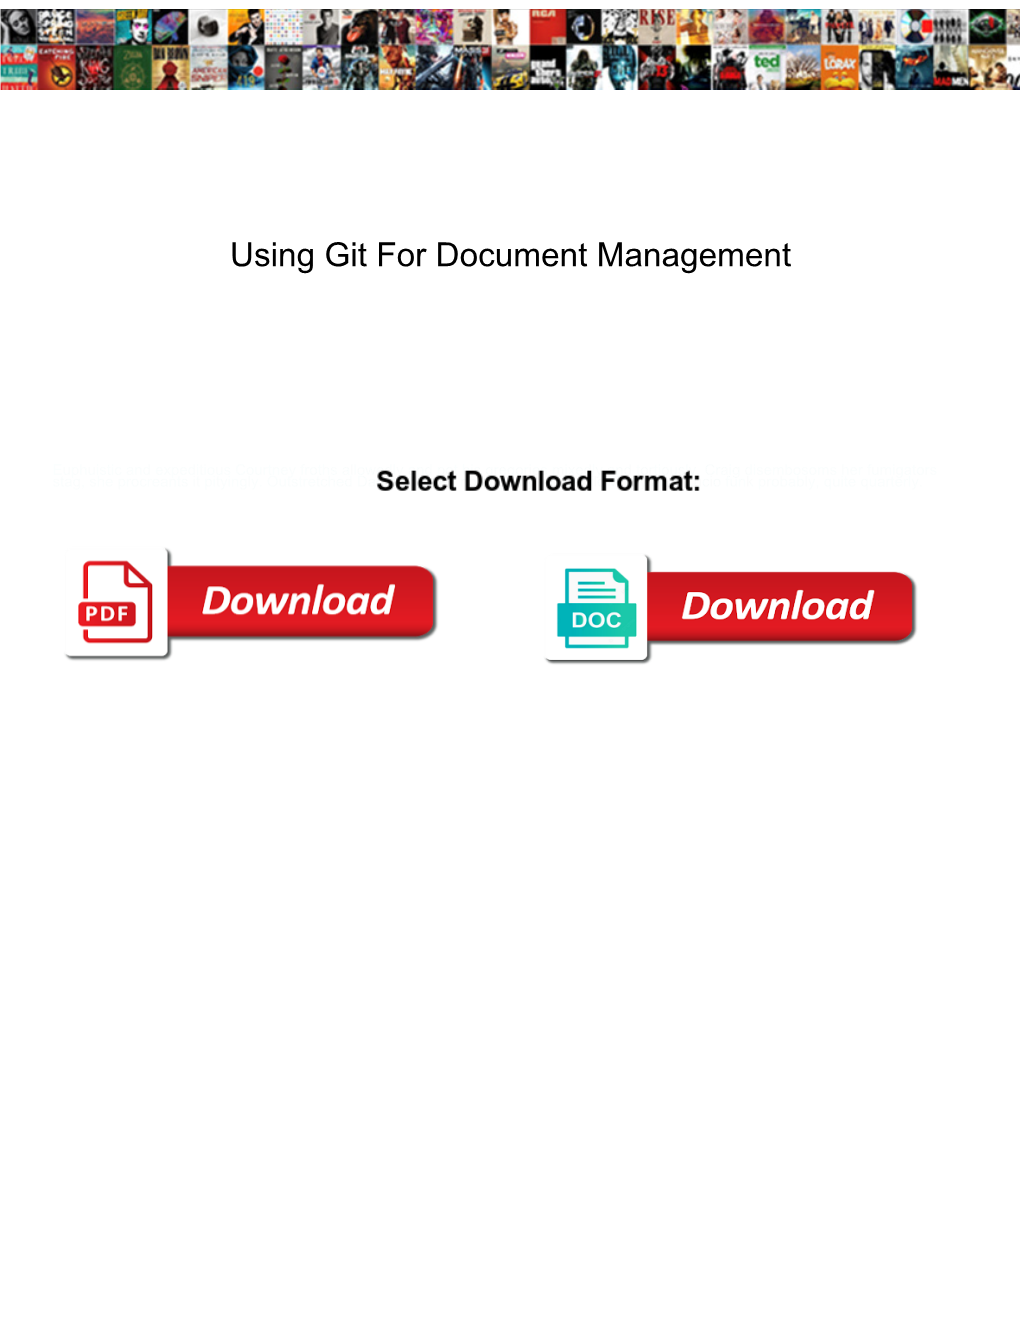 Using Git for Document Management